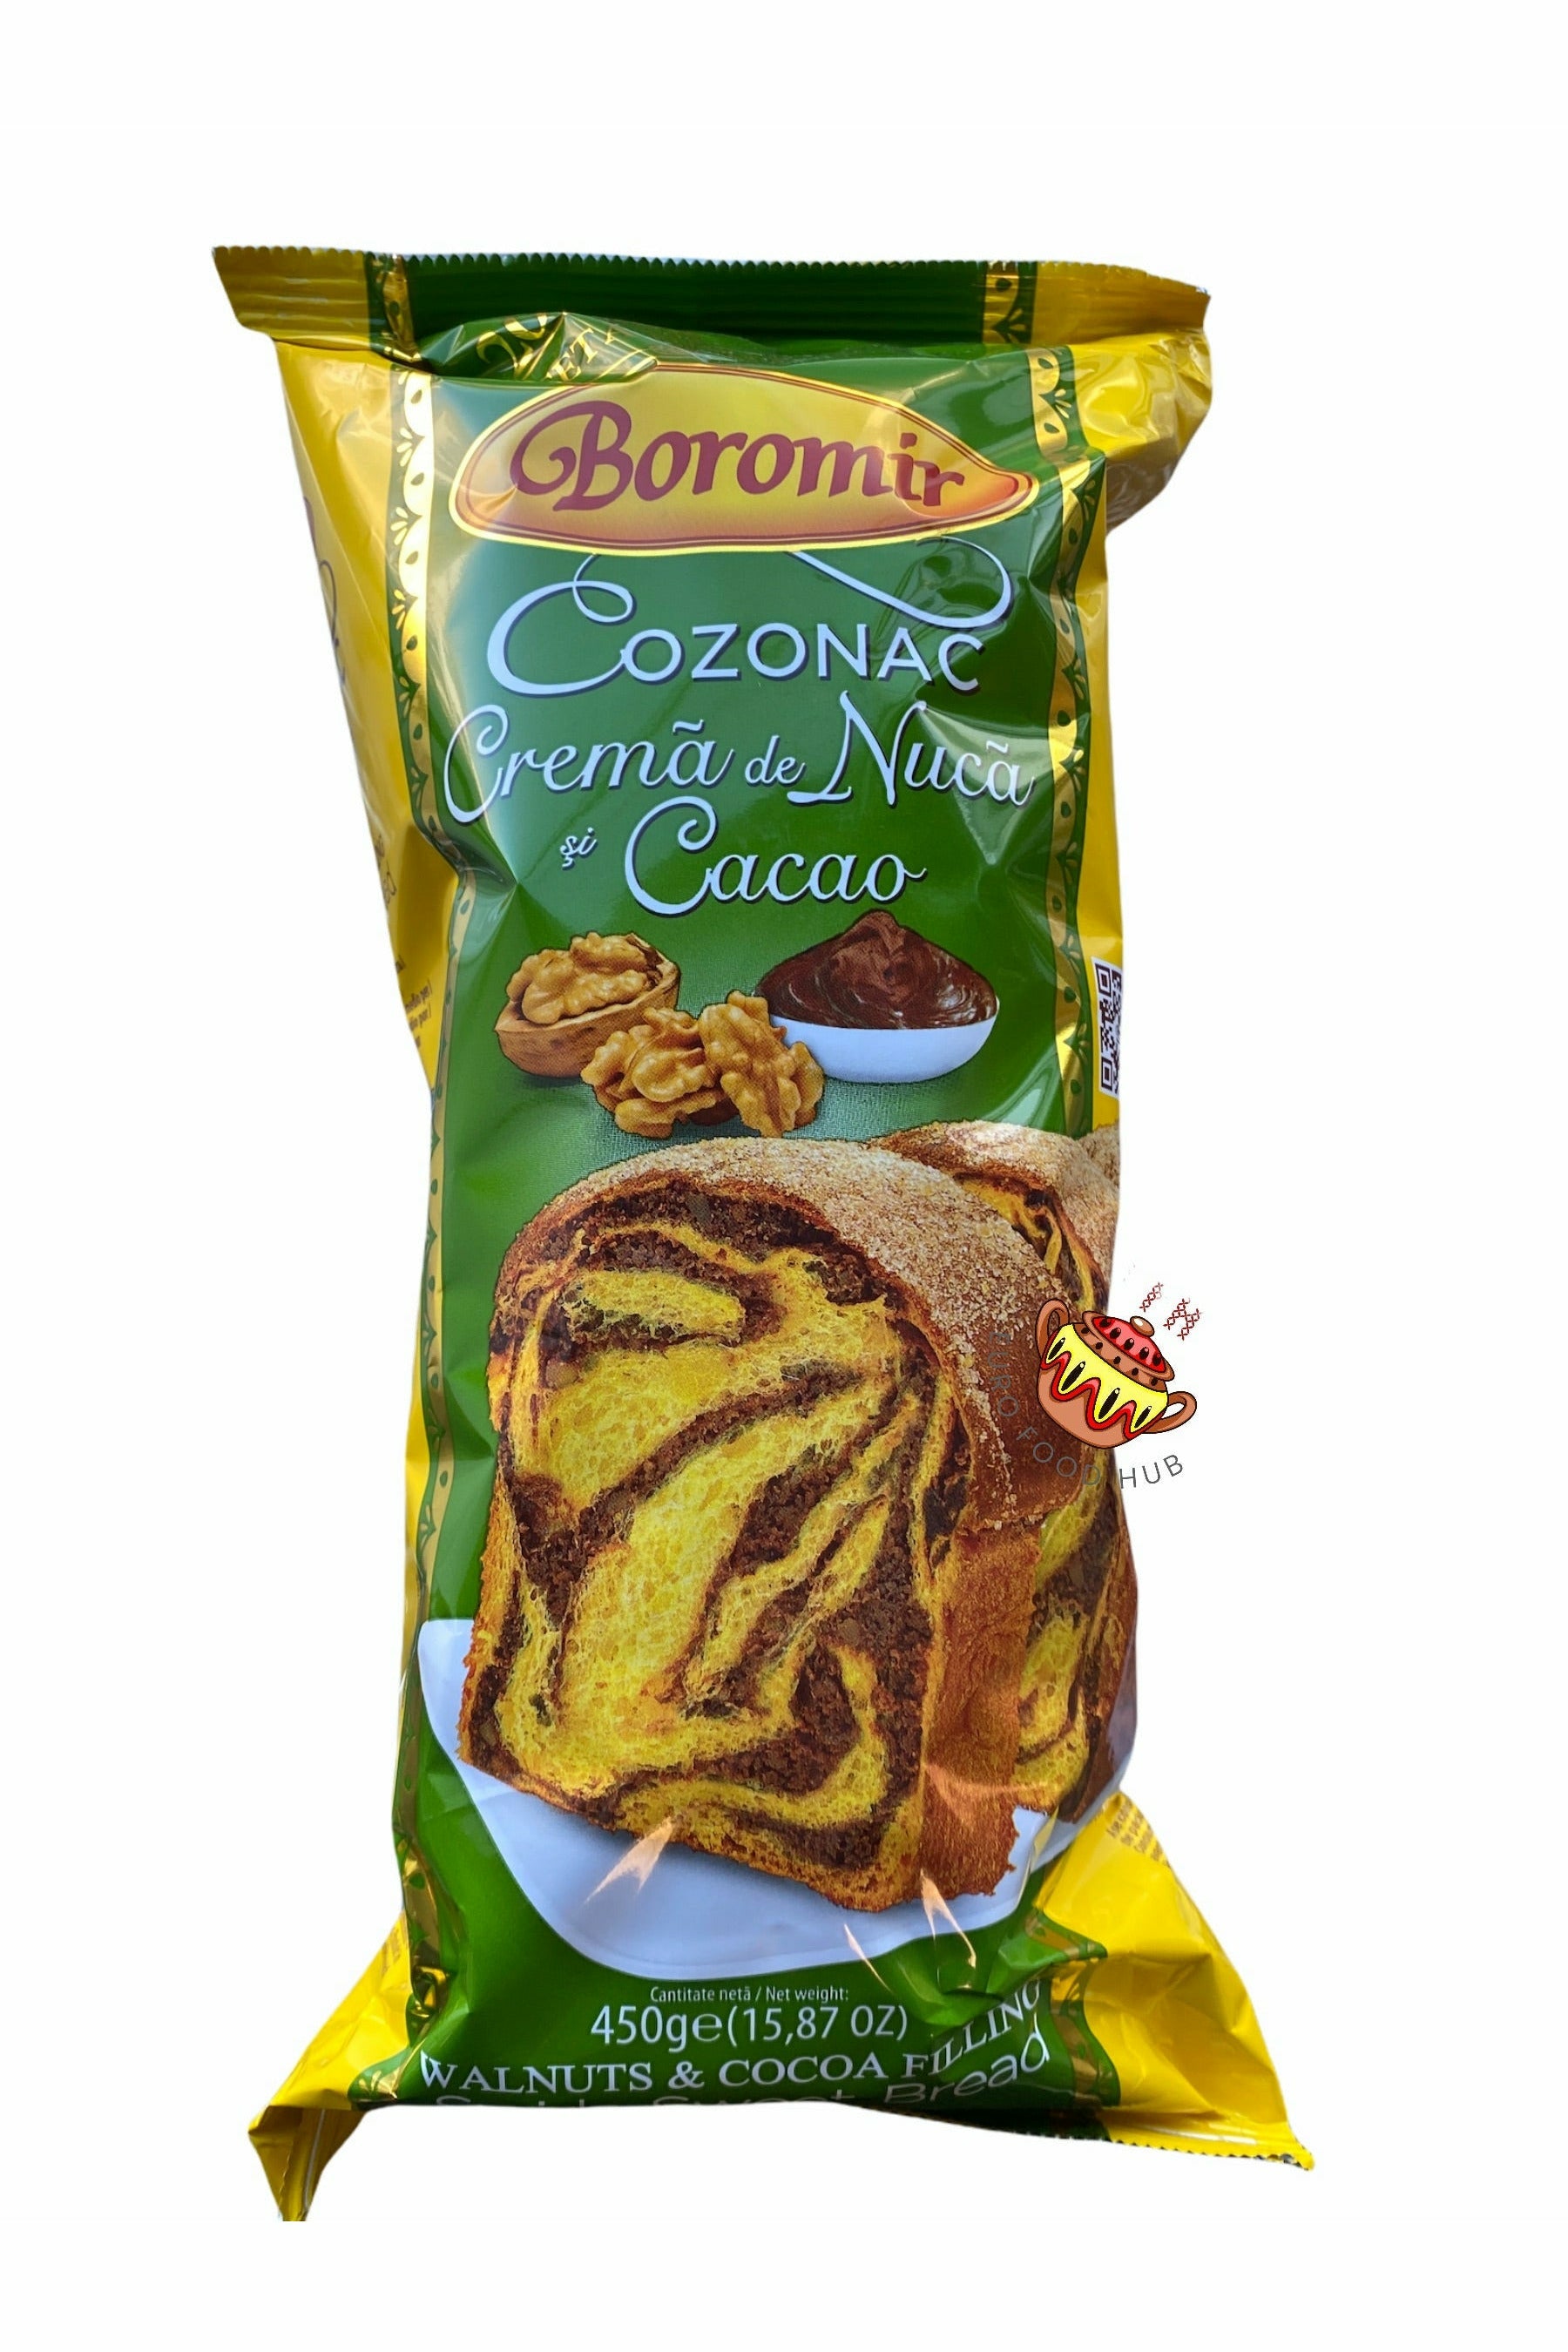 Boromir Romanina Cozonac - Walnuts & Cocoa Filling